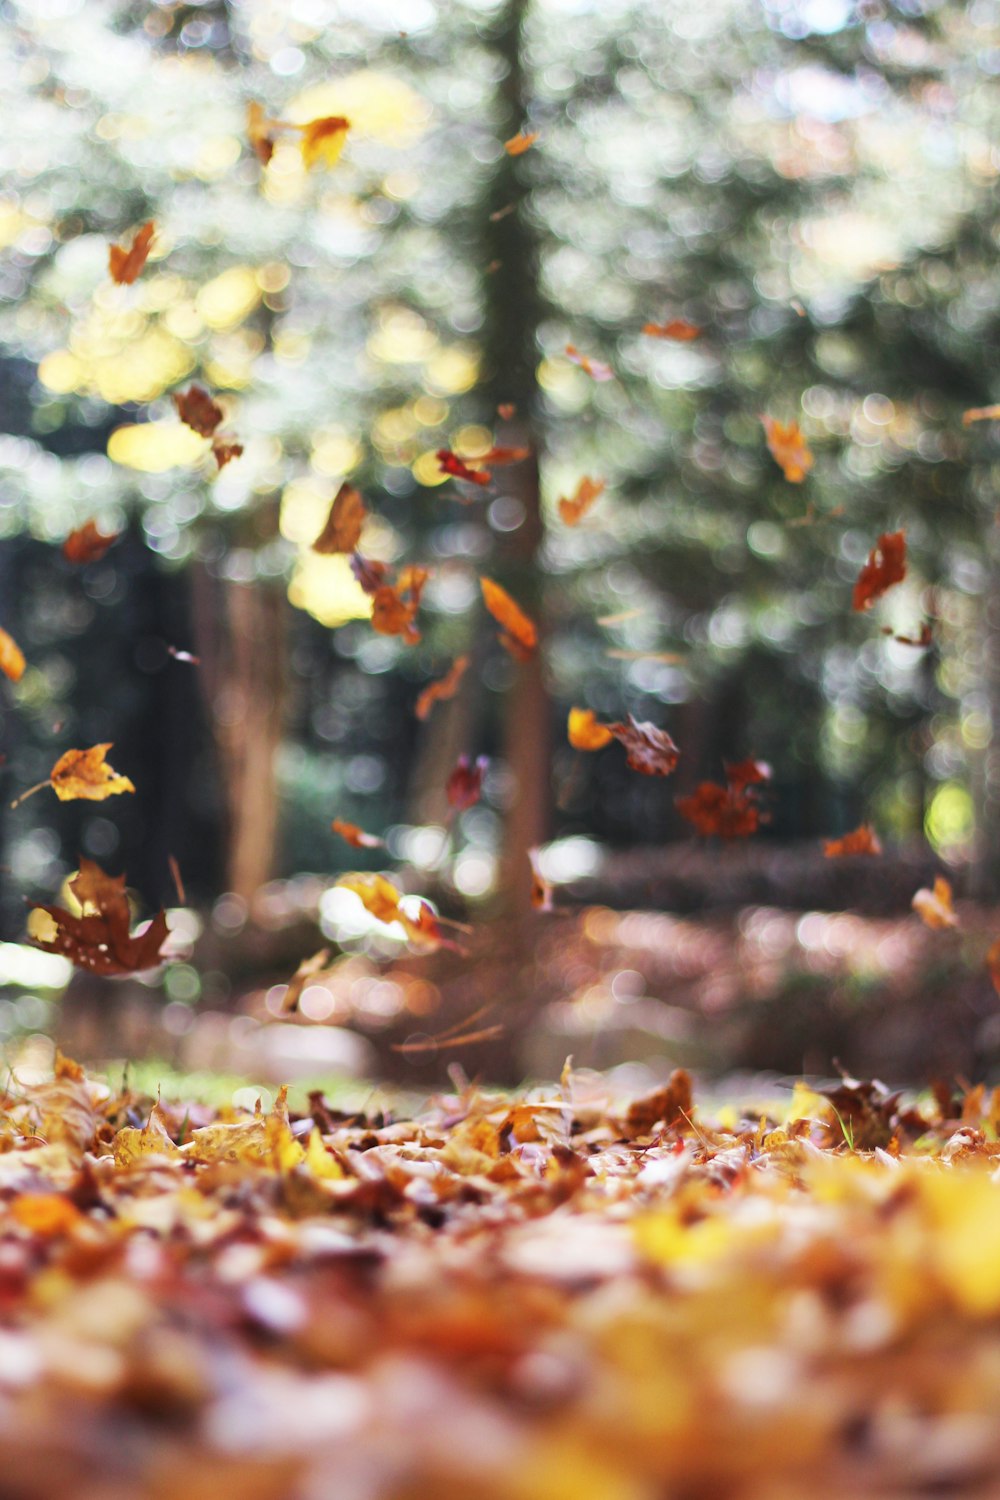 500+ Autumn Images  Download Free Images on Unsplash